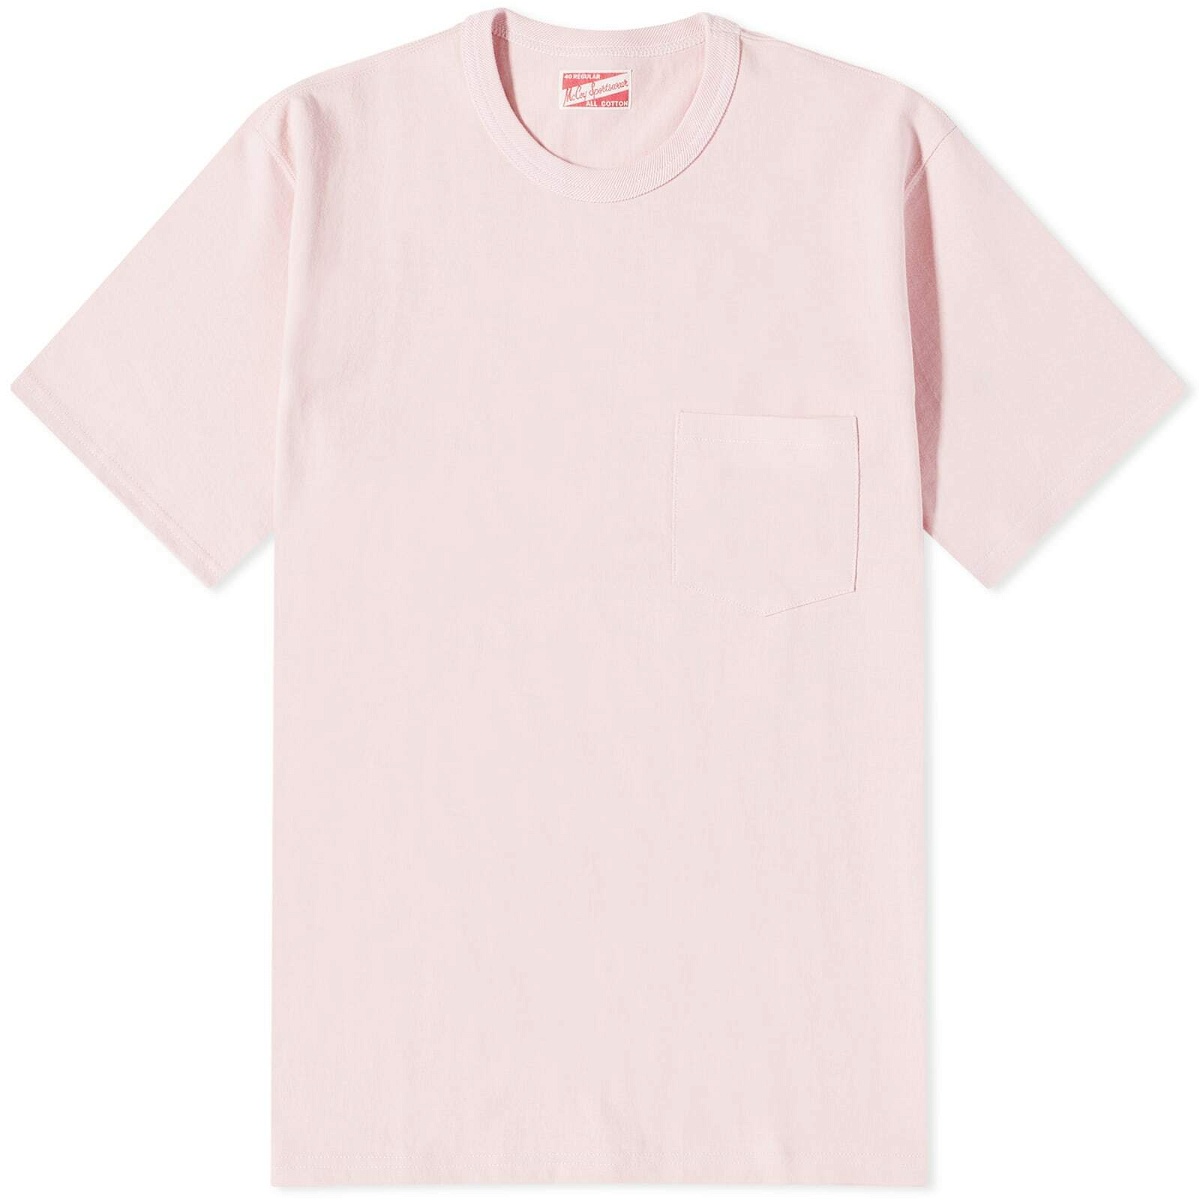 Photo: The Real McCoy's Men's Joe McCoy Pocket T-Shirt in Pink